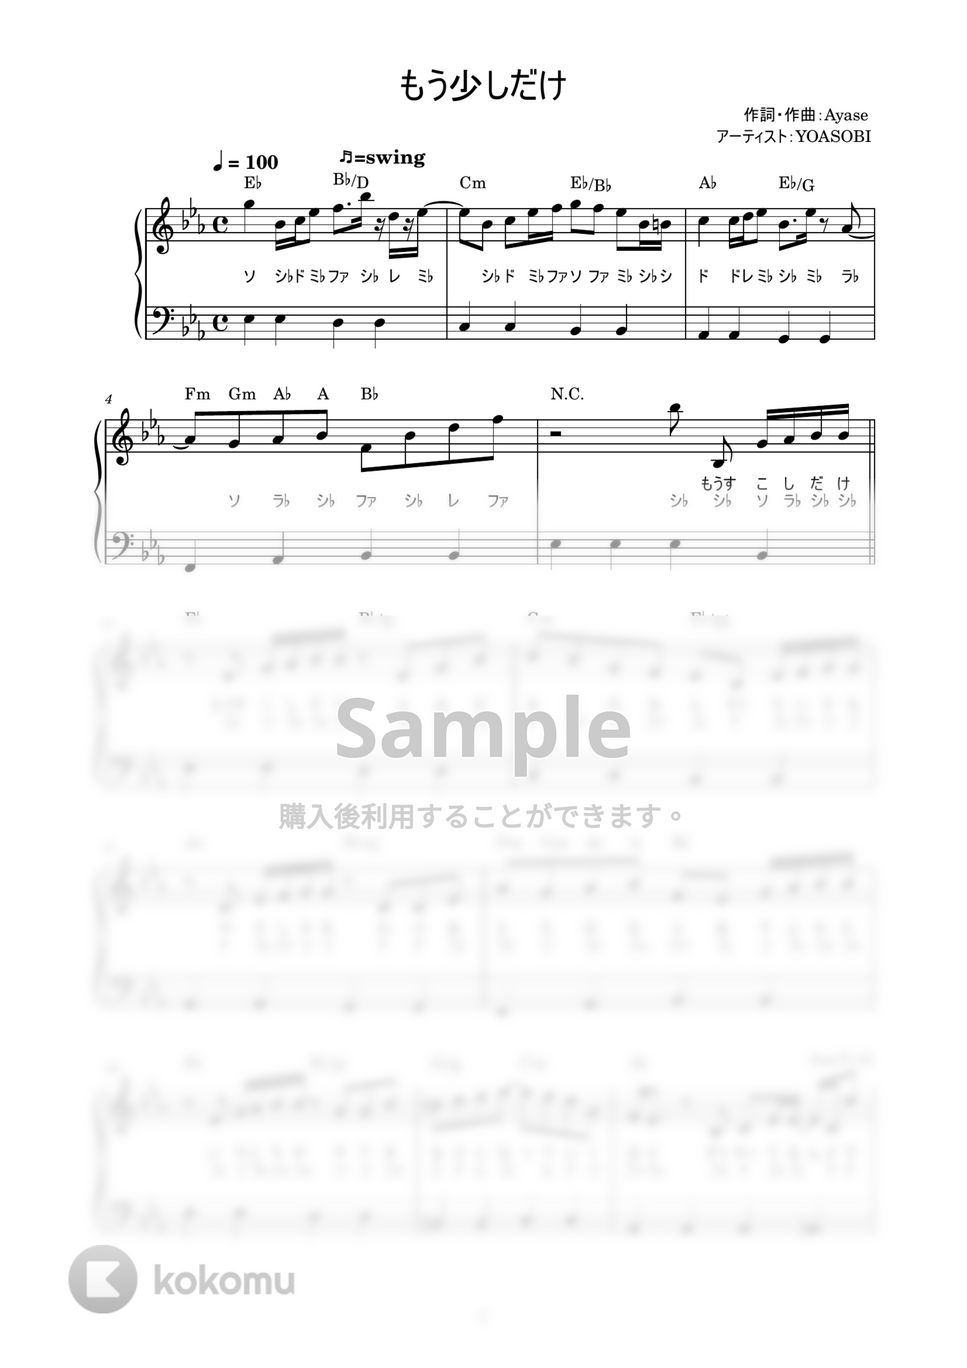 YOASOBI - もう少しだけ (かんたん / 歌詞付き / ドレミ付き / 初心者) by piano.tokyo